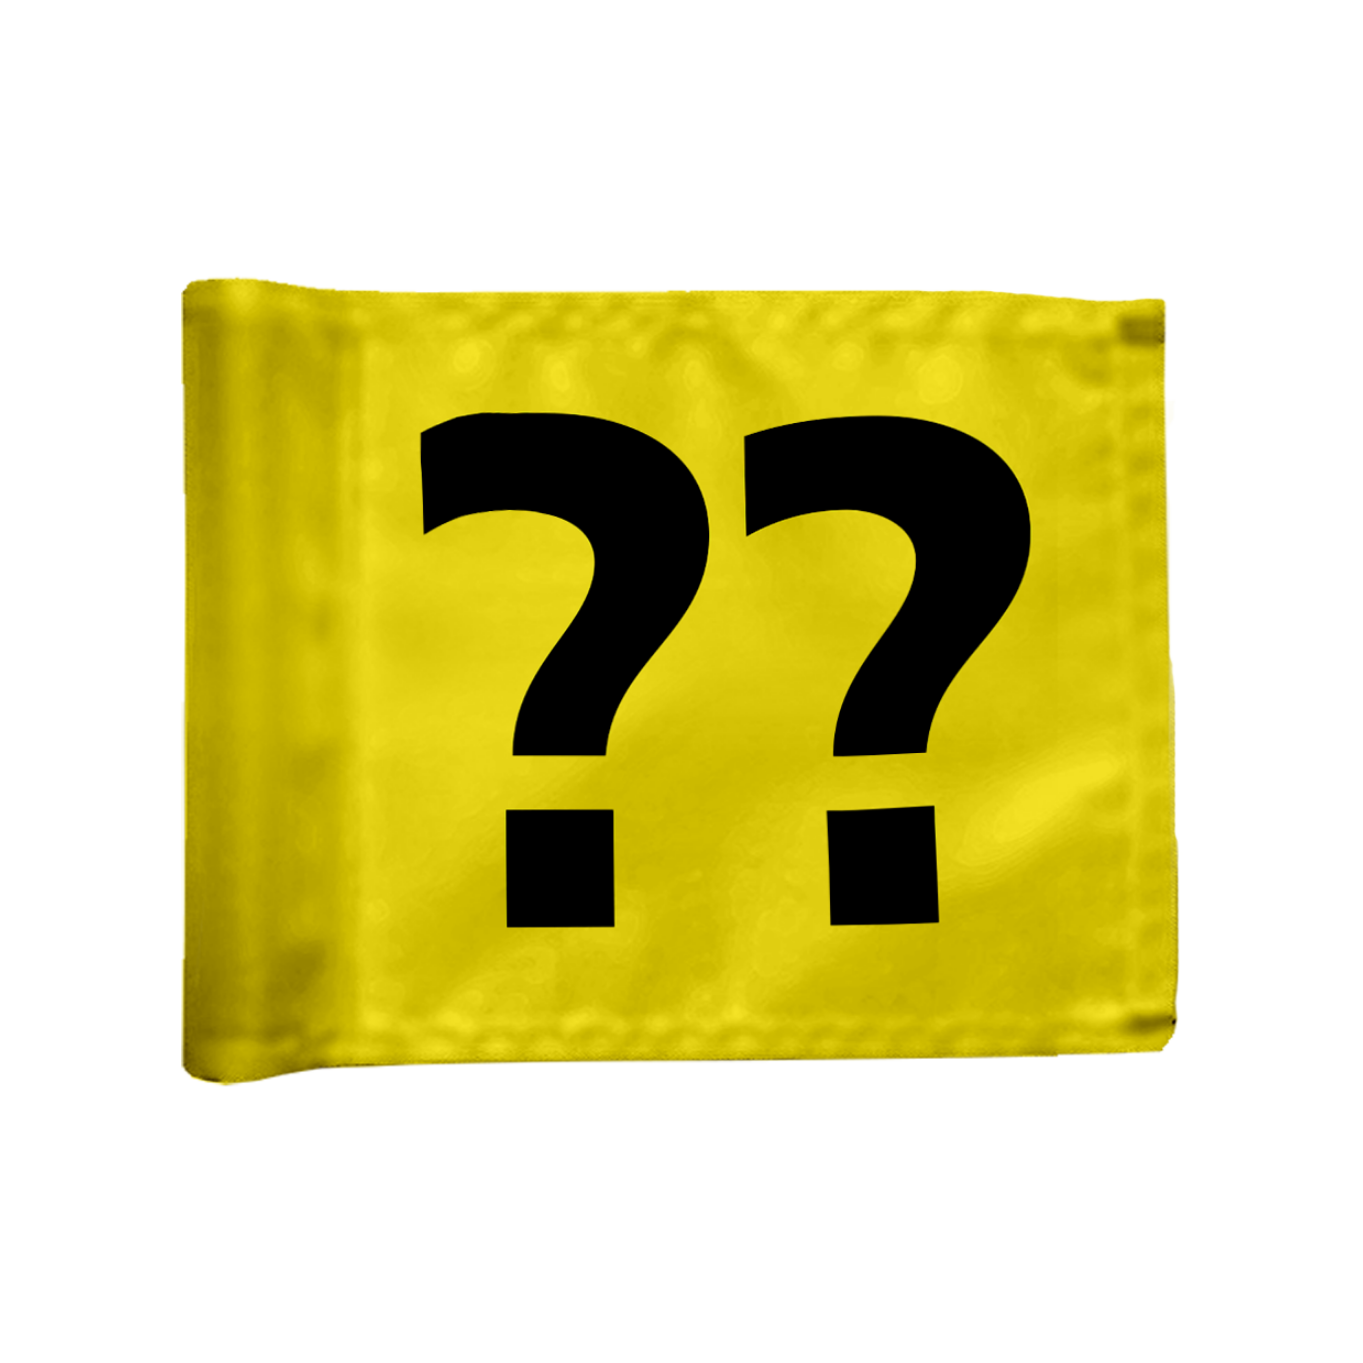 Styckvis Adventure Golf flagga i gul med valfritt hålnummer, 200 gram flaggduk